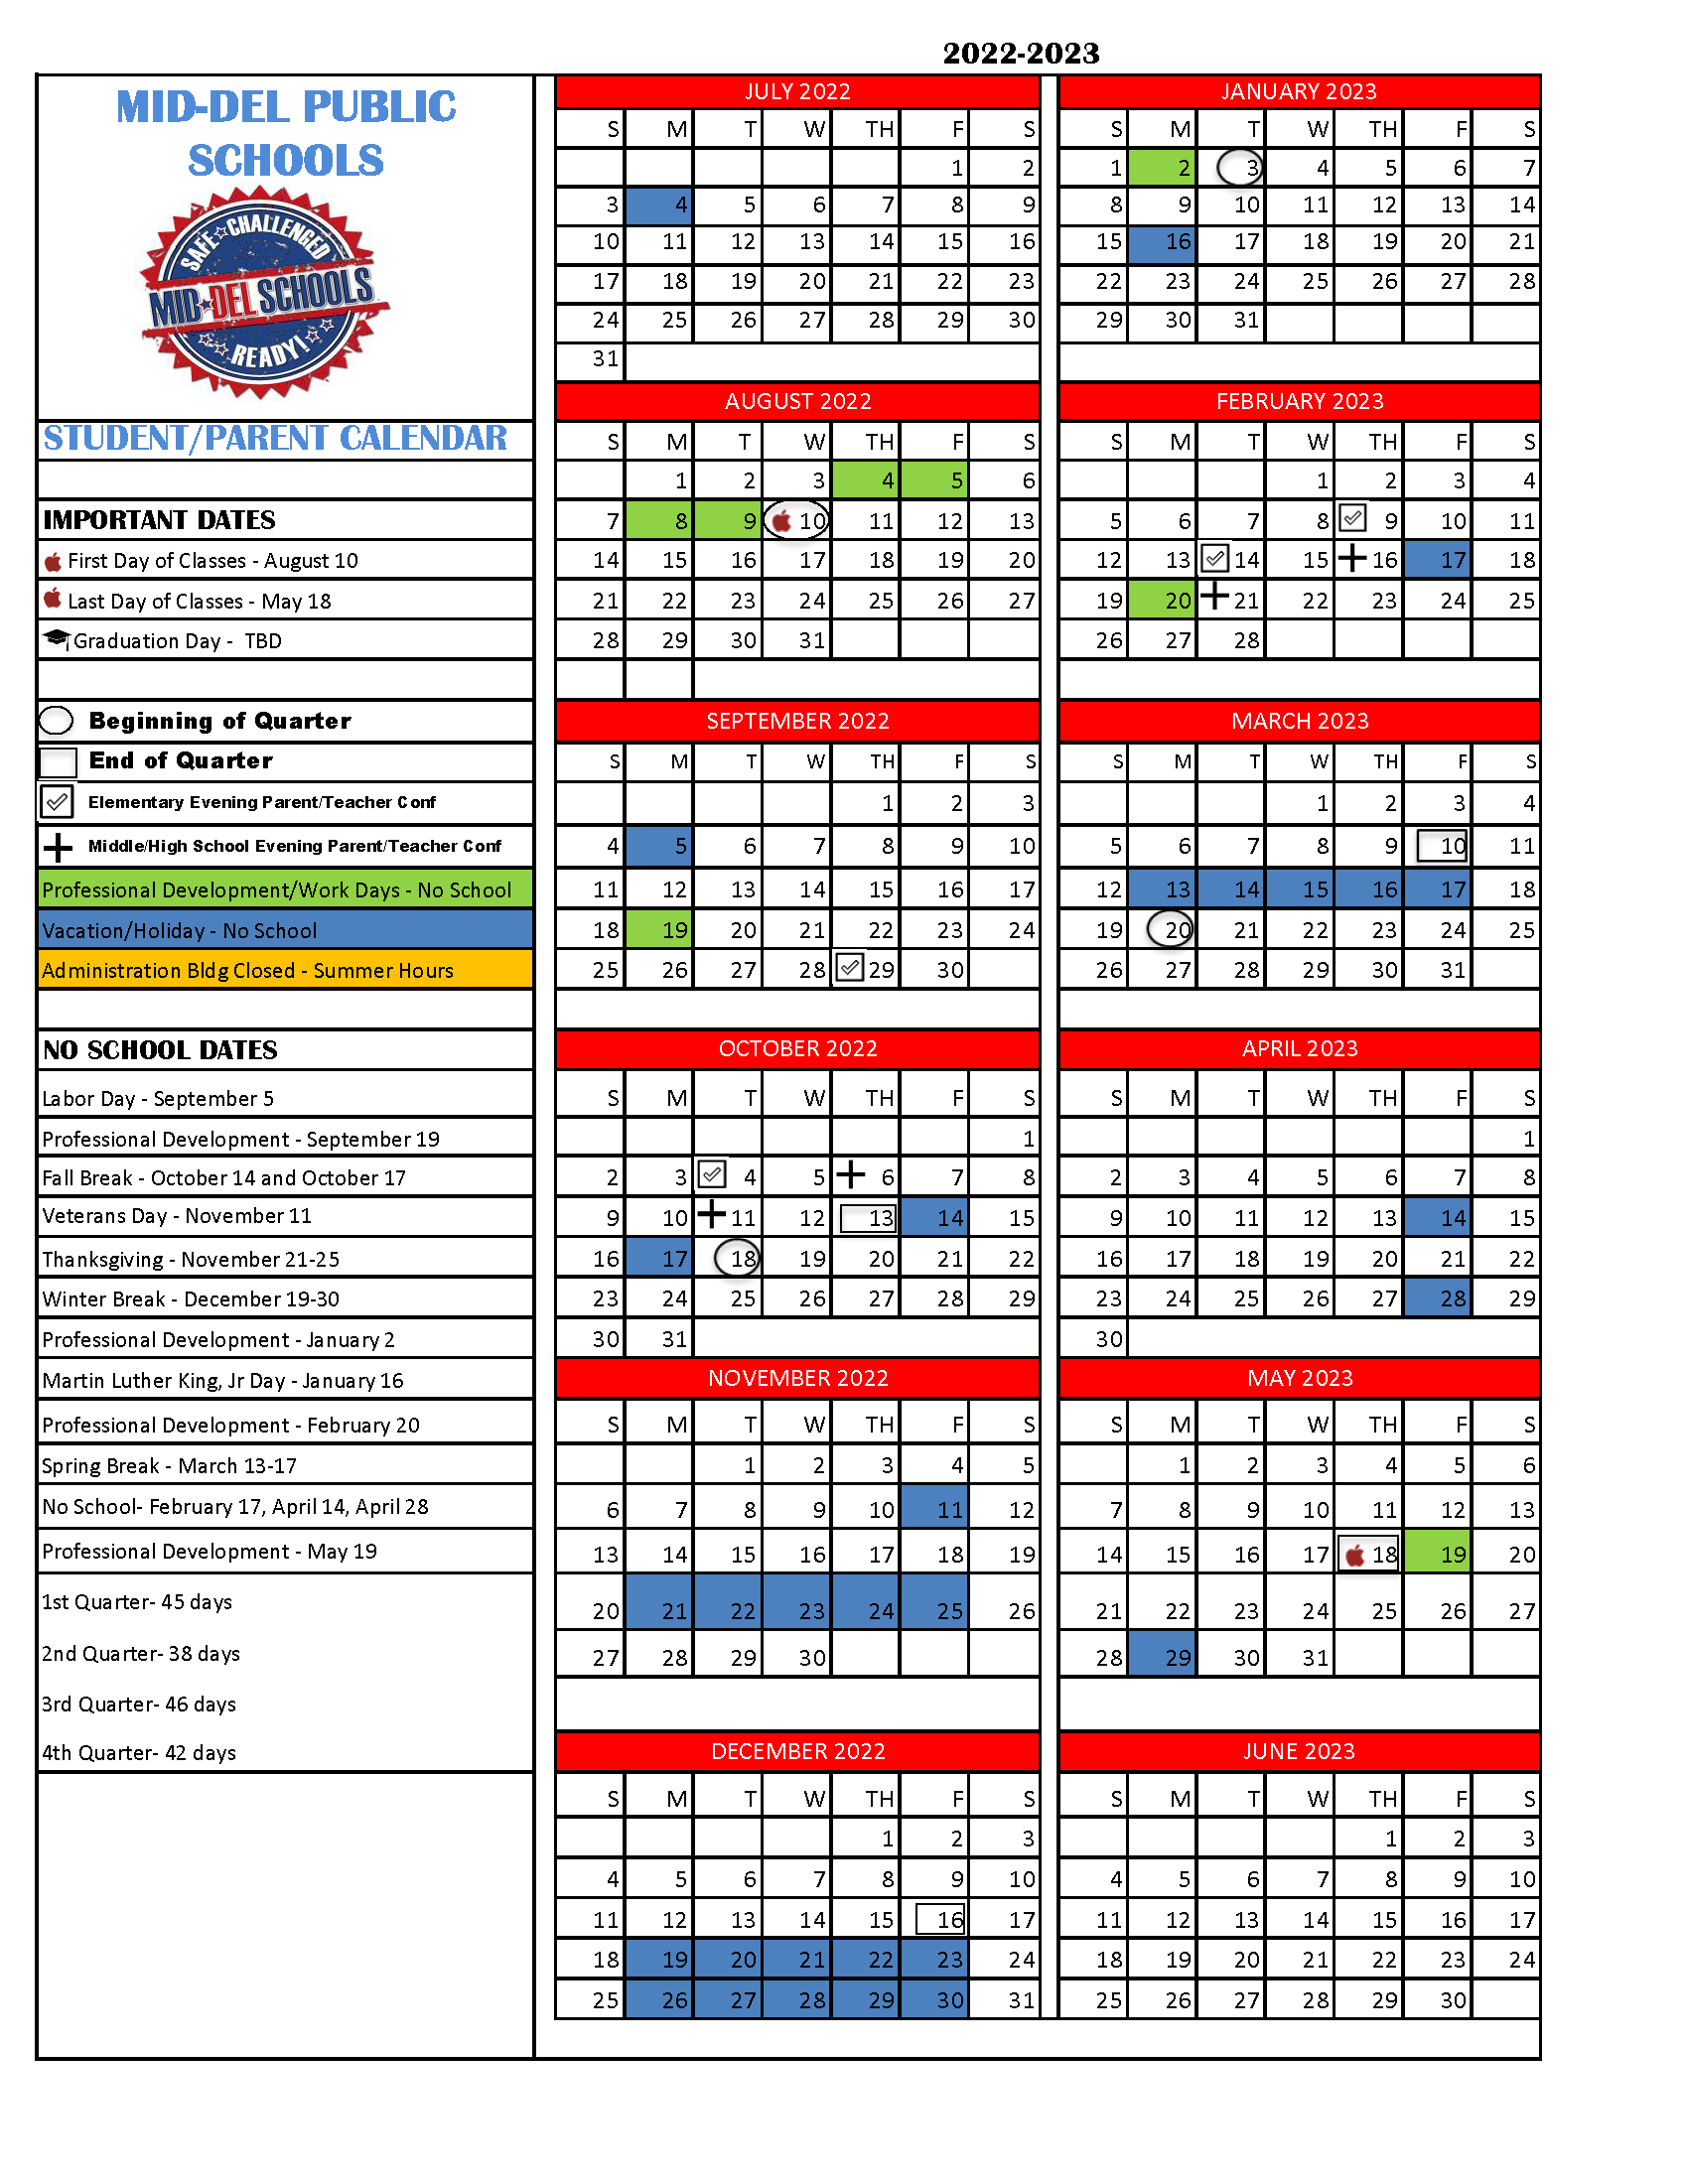 2022-23 district calendar